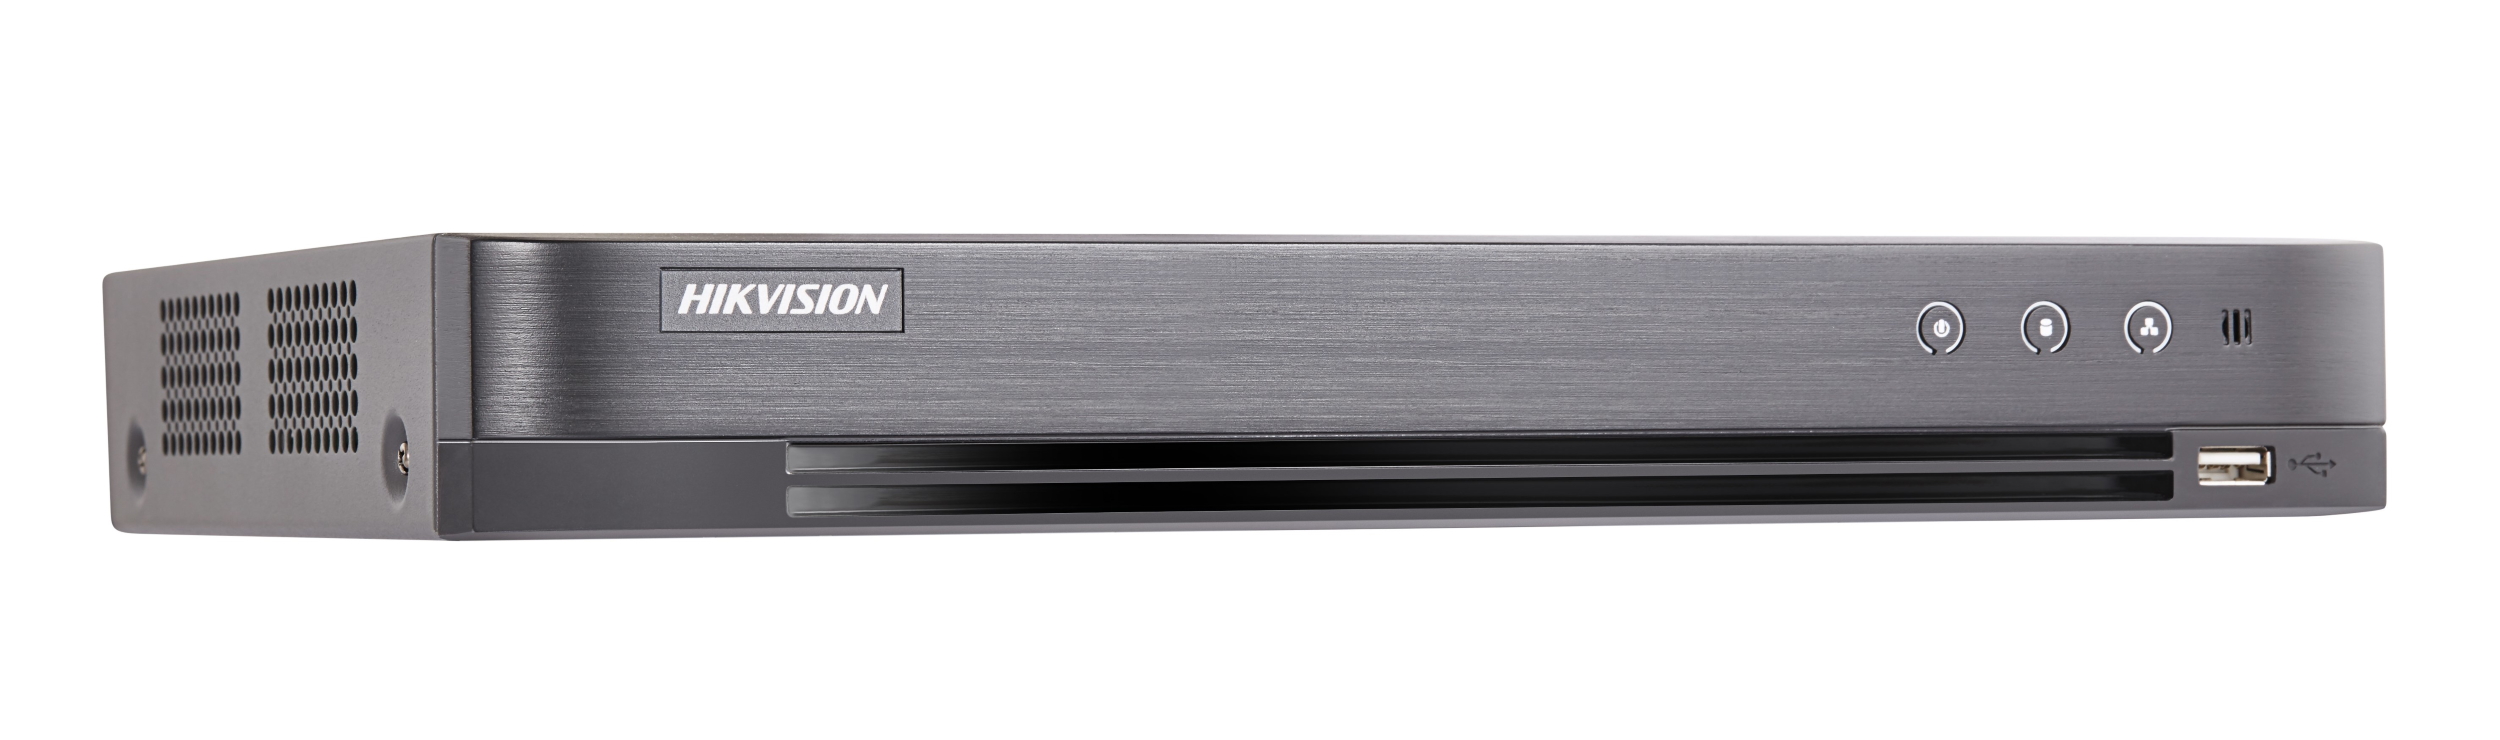 20000857 Hikvision DVR Turbo HD Acusense, 4-canaux,  5MP, 1 HDD Tribride.